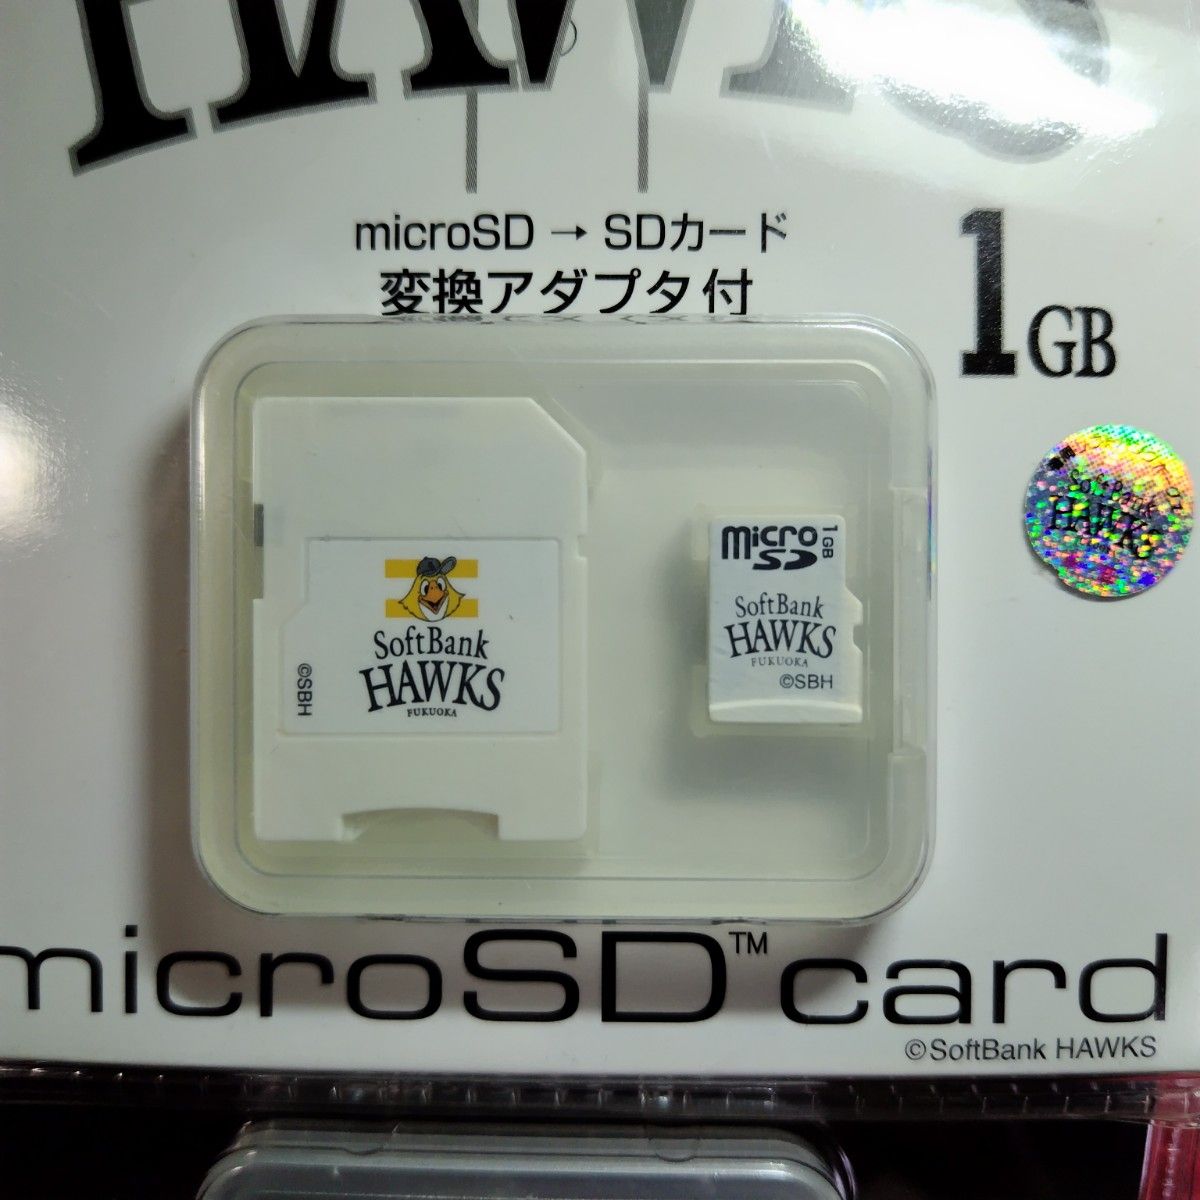 microSD card microSD カード SoftBank HAWKS ver. 1GB 変換アダプタ付 2種セット